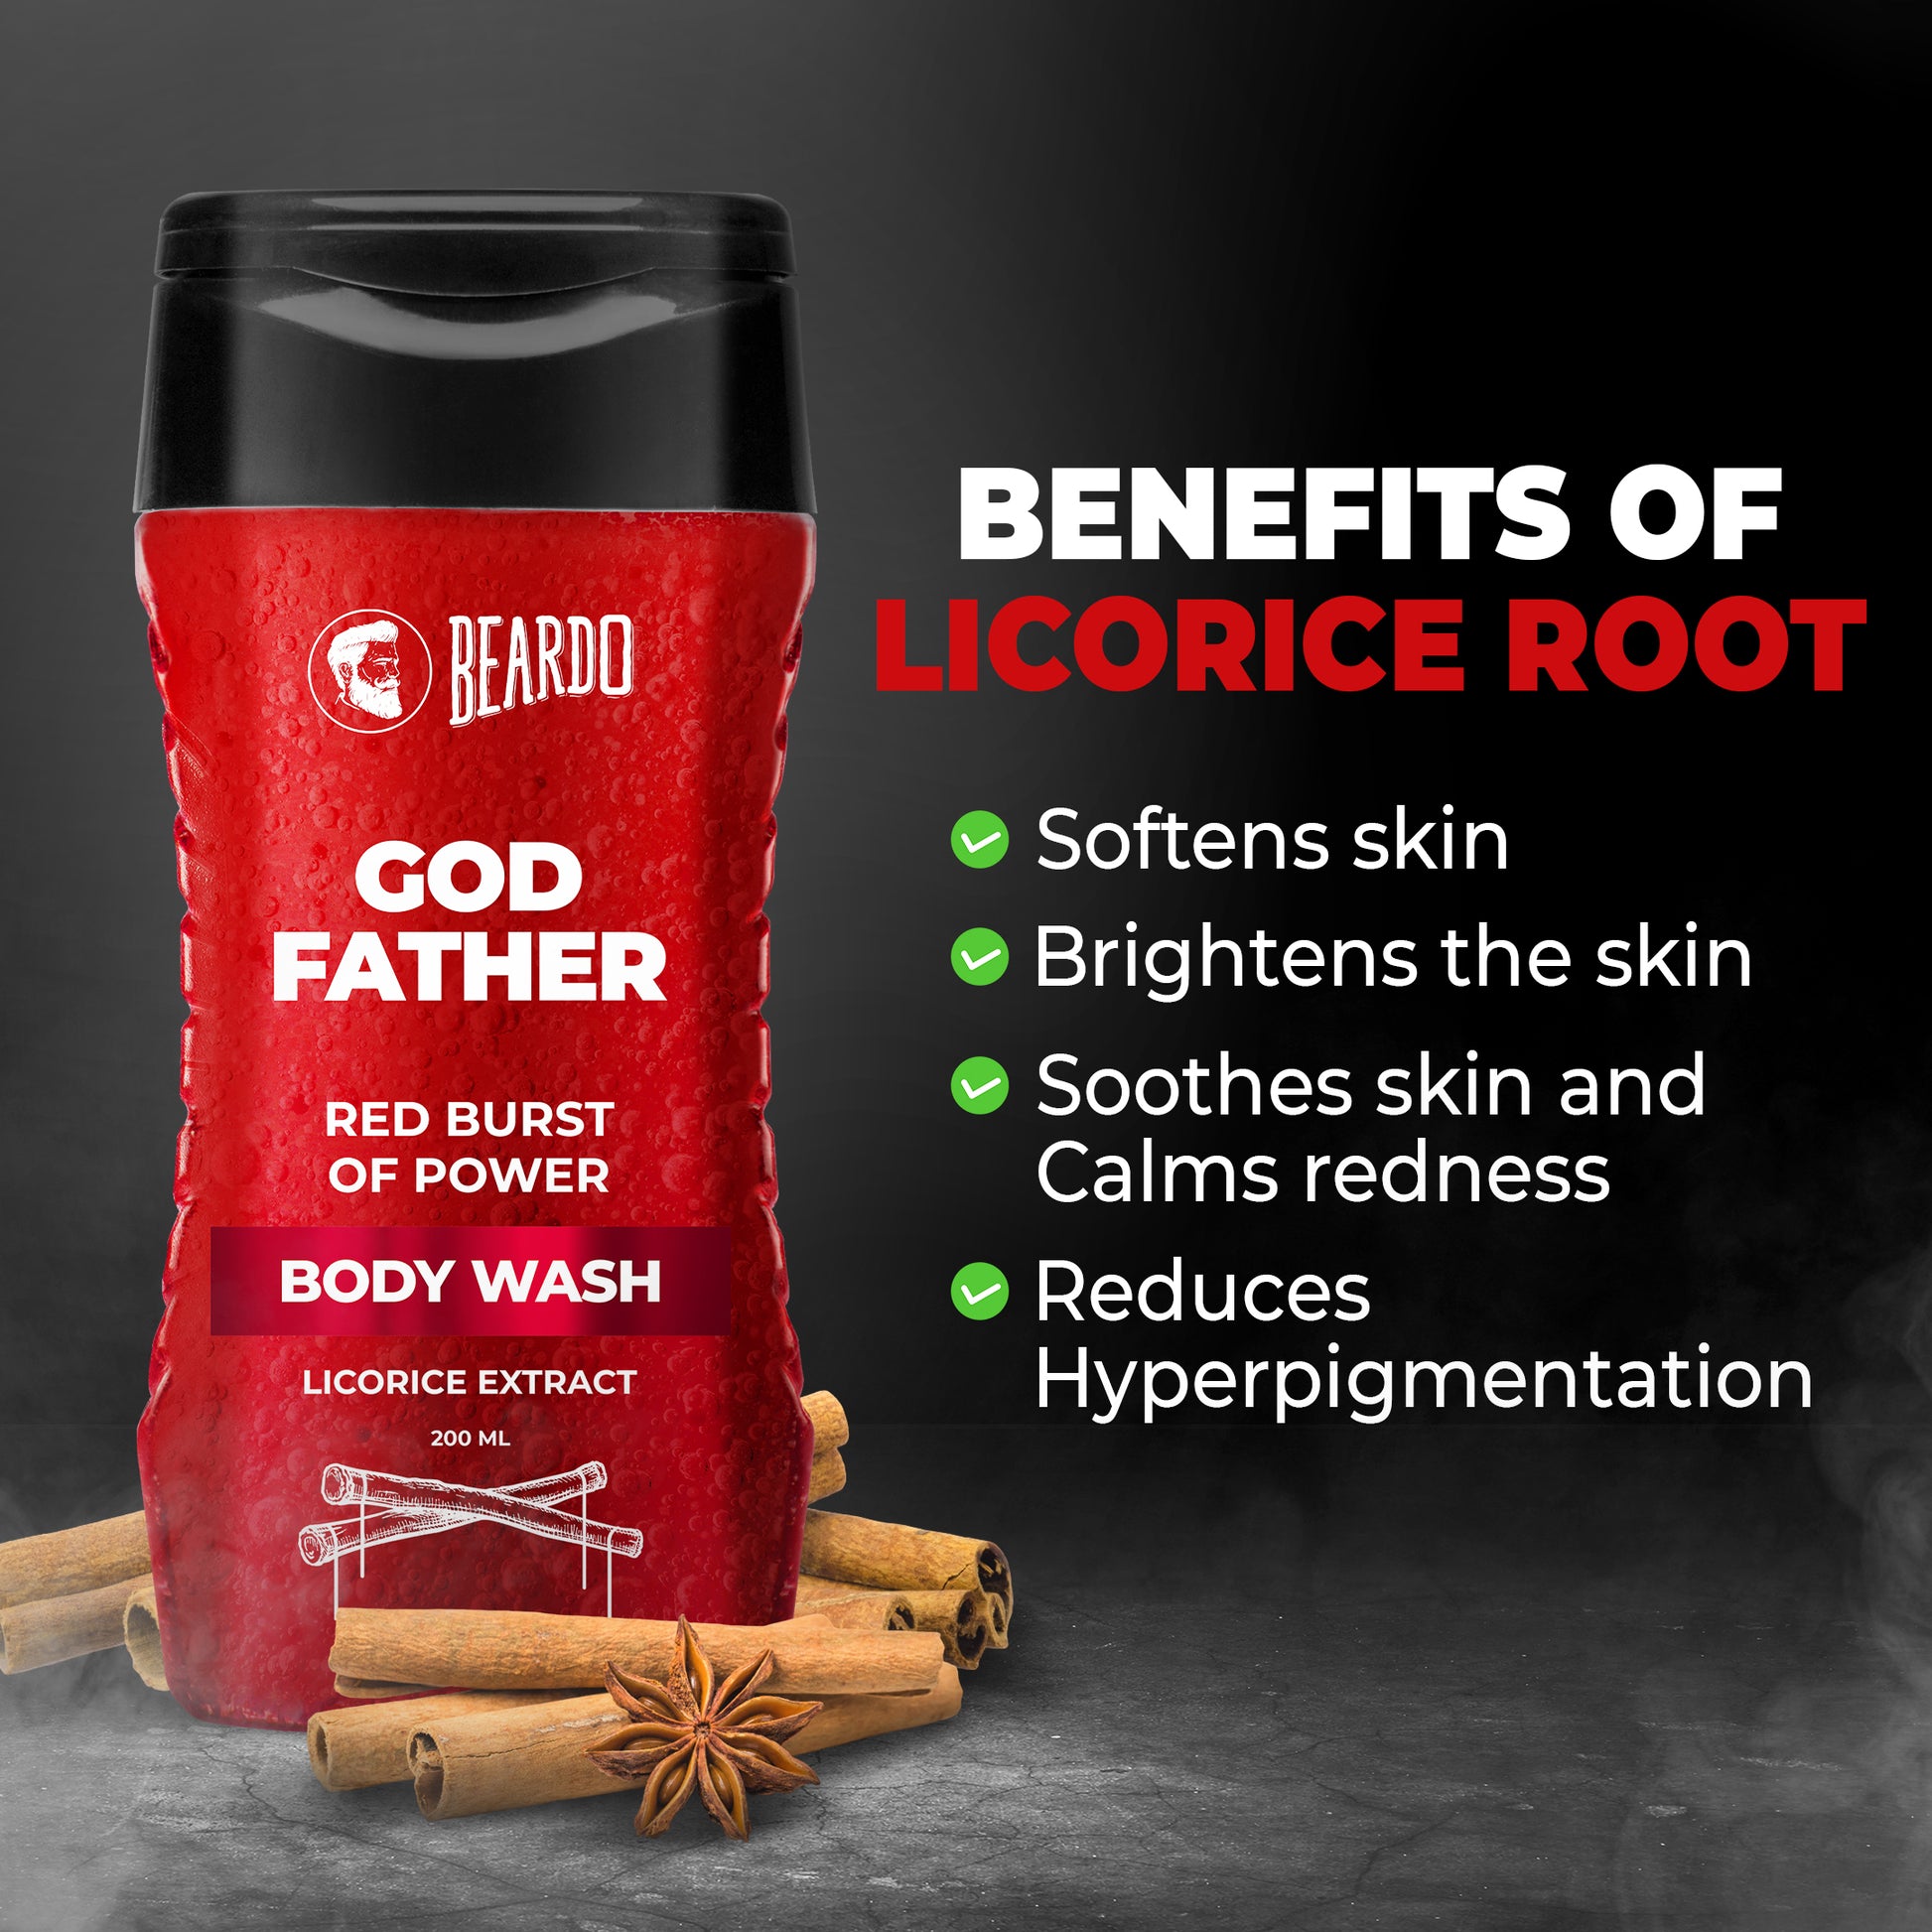 Benefits of licorice root